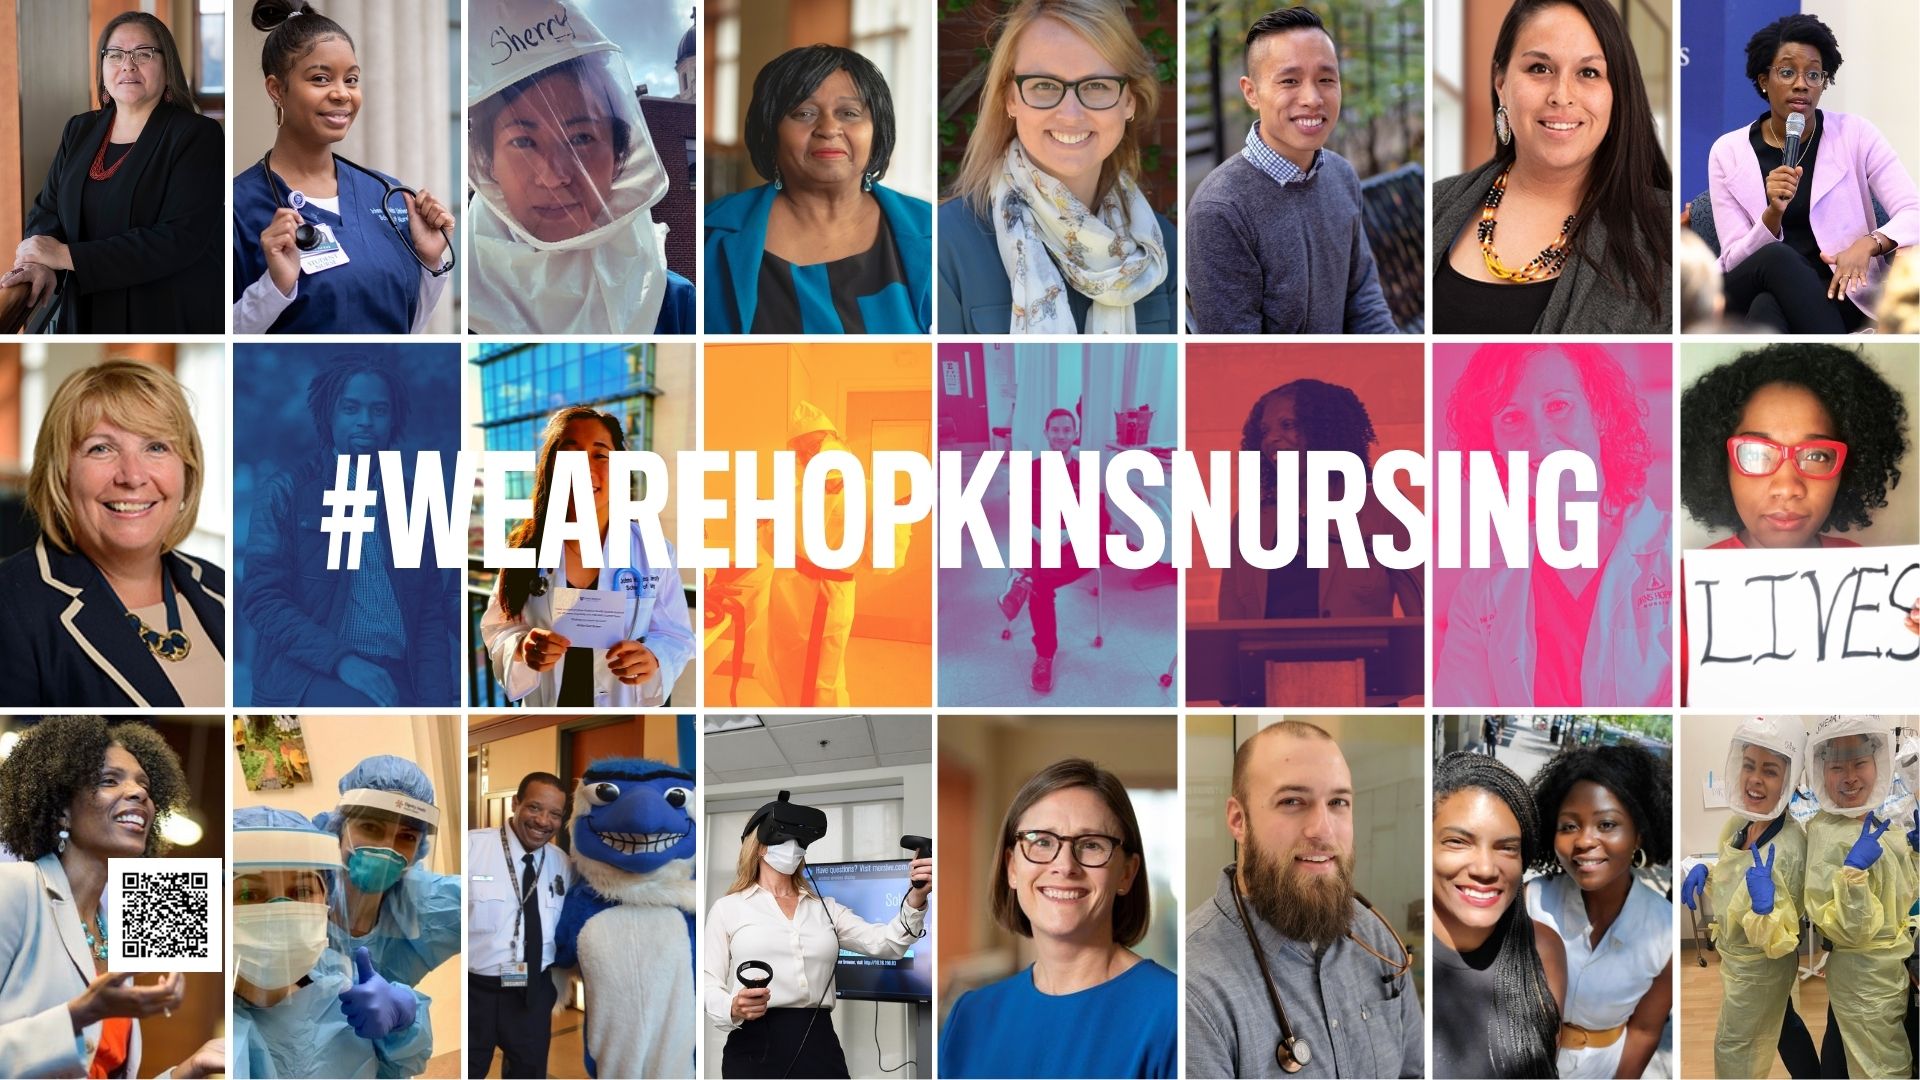 We Are Hopkins Nursing